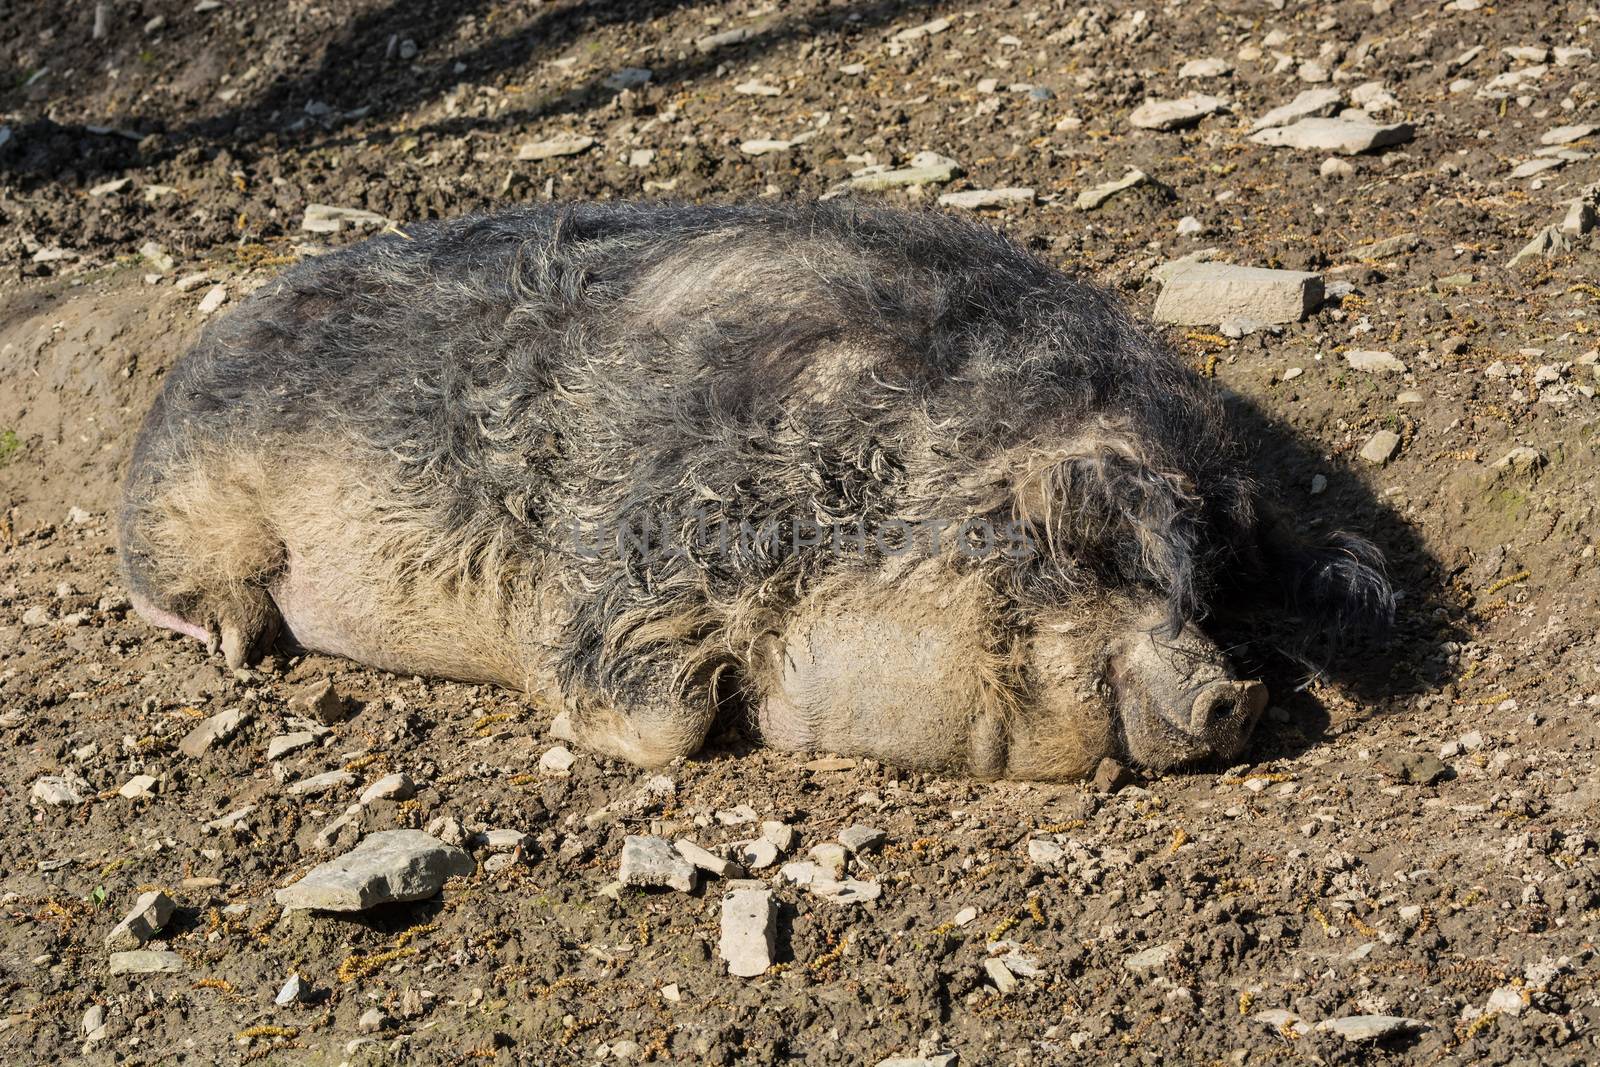 Wild boar in the mud in the warm summer sun lying.